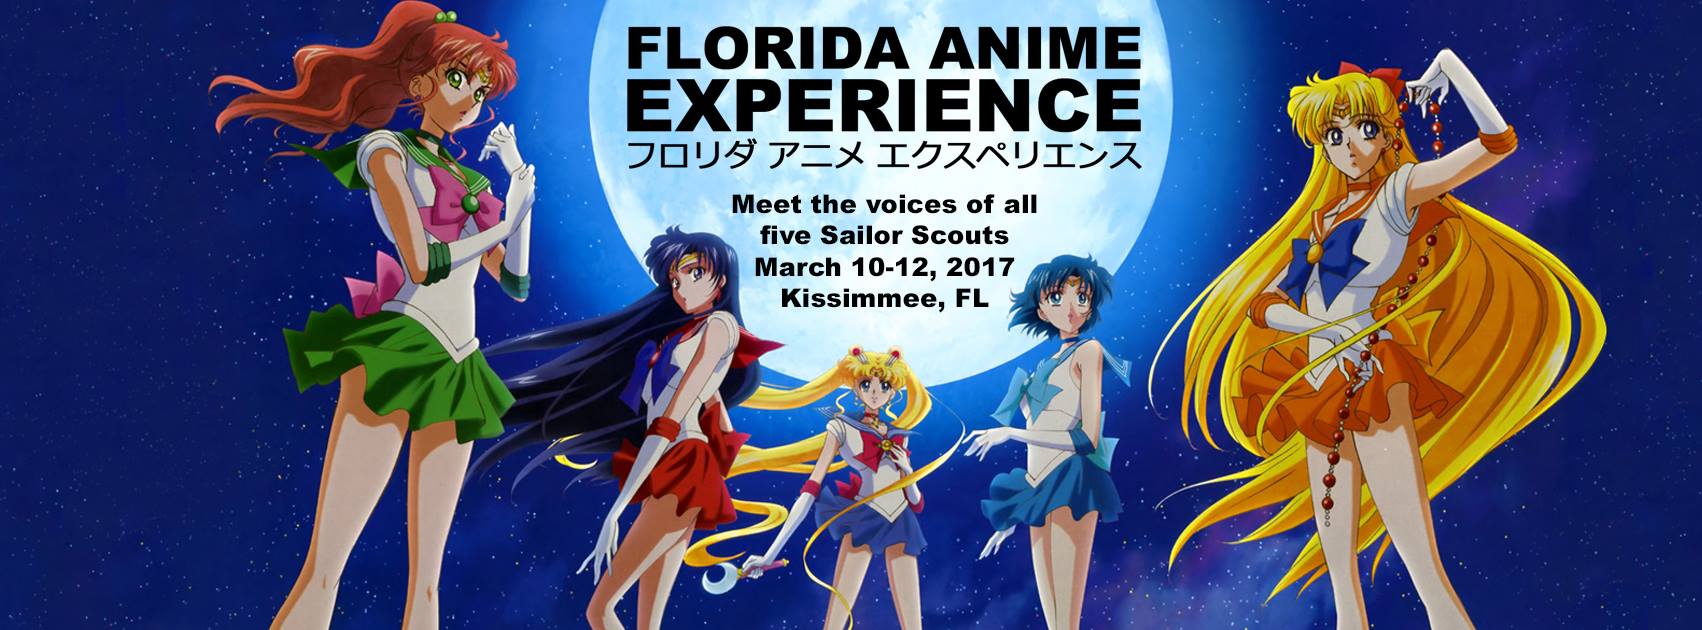 Florida Anime Experience 2017